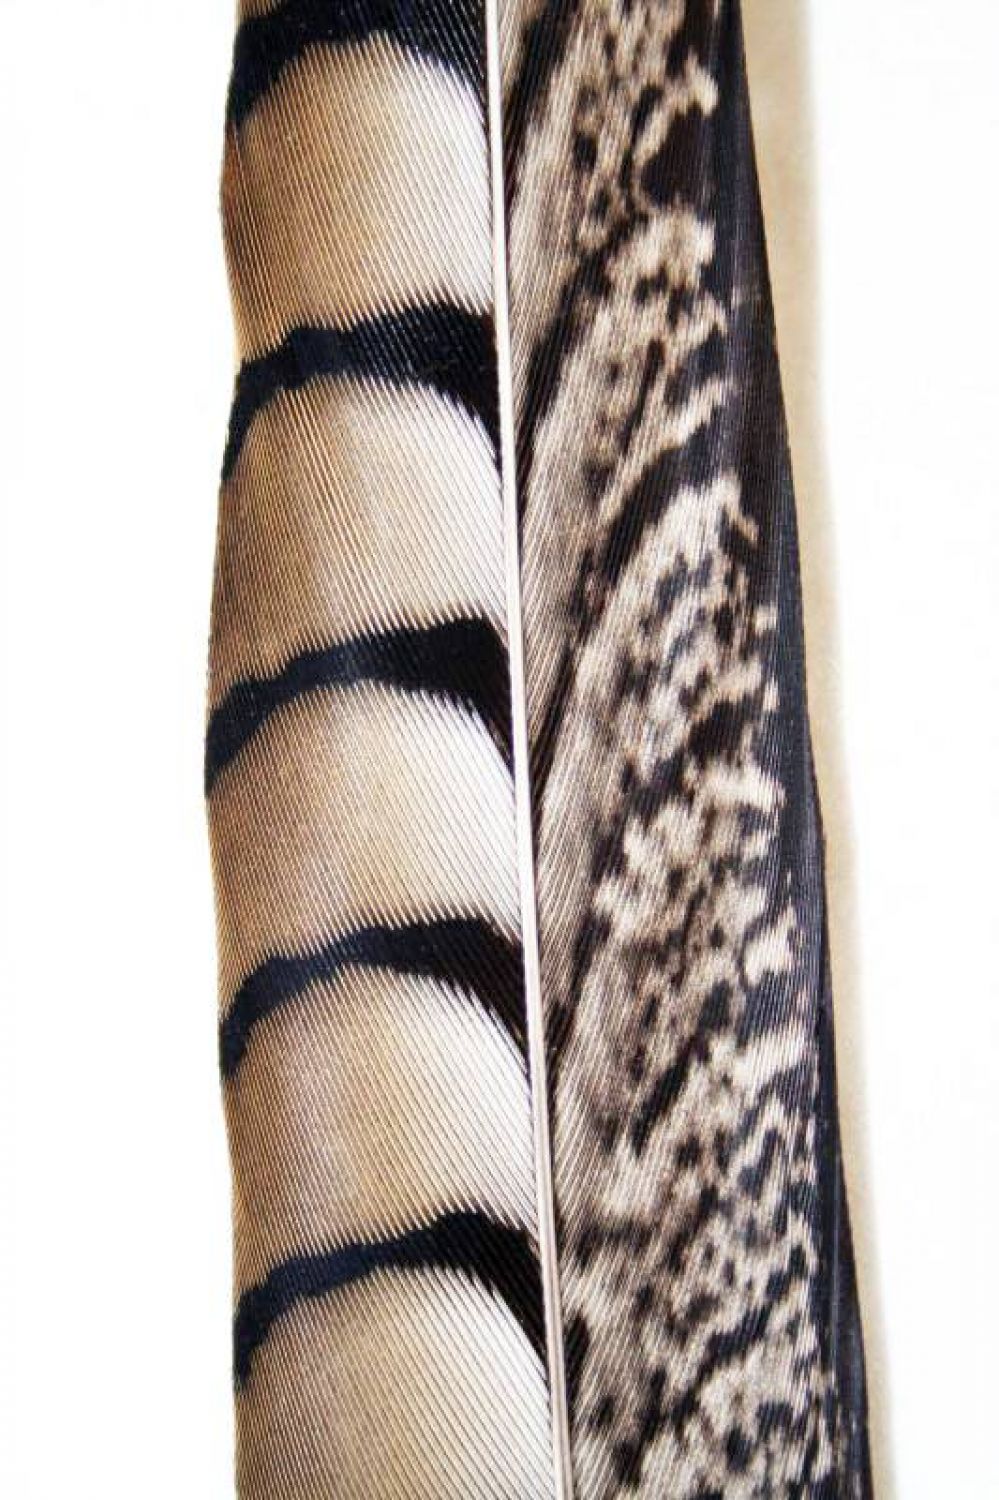 Lady-Amherst Pheasant 1st Q, 80-90cm